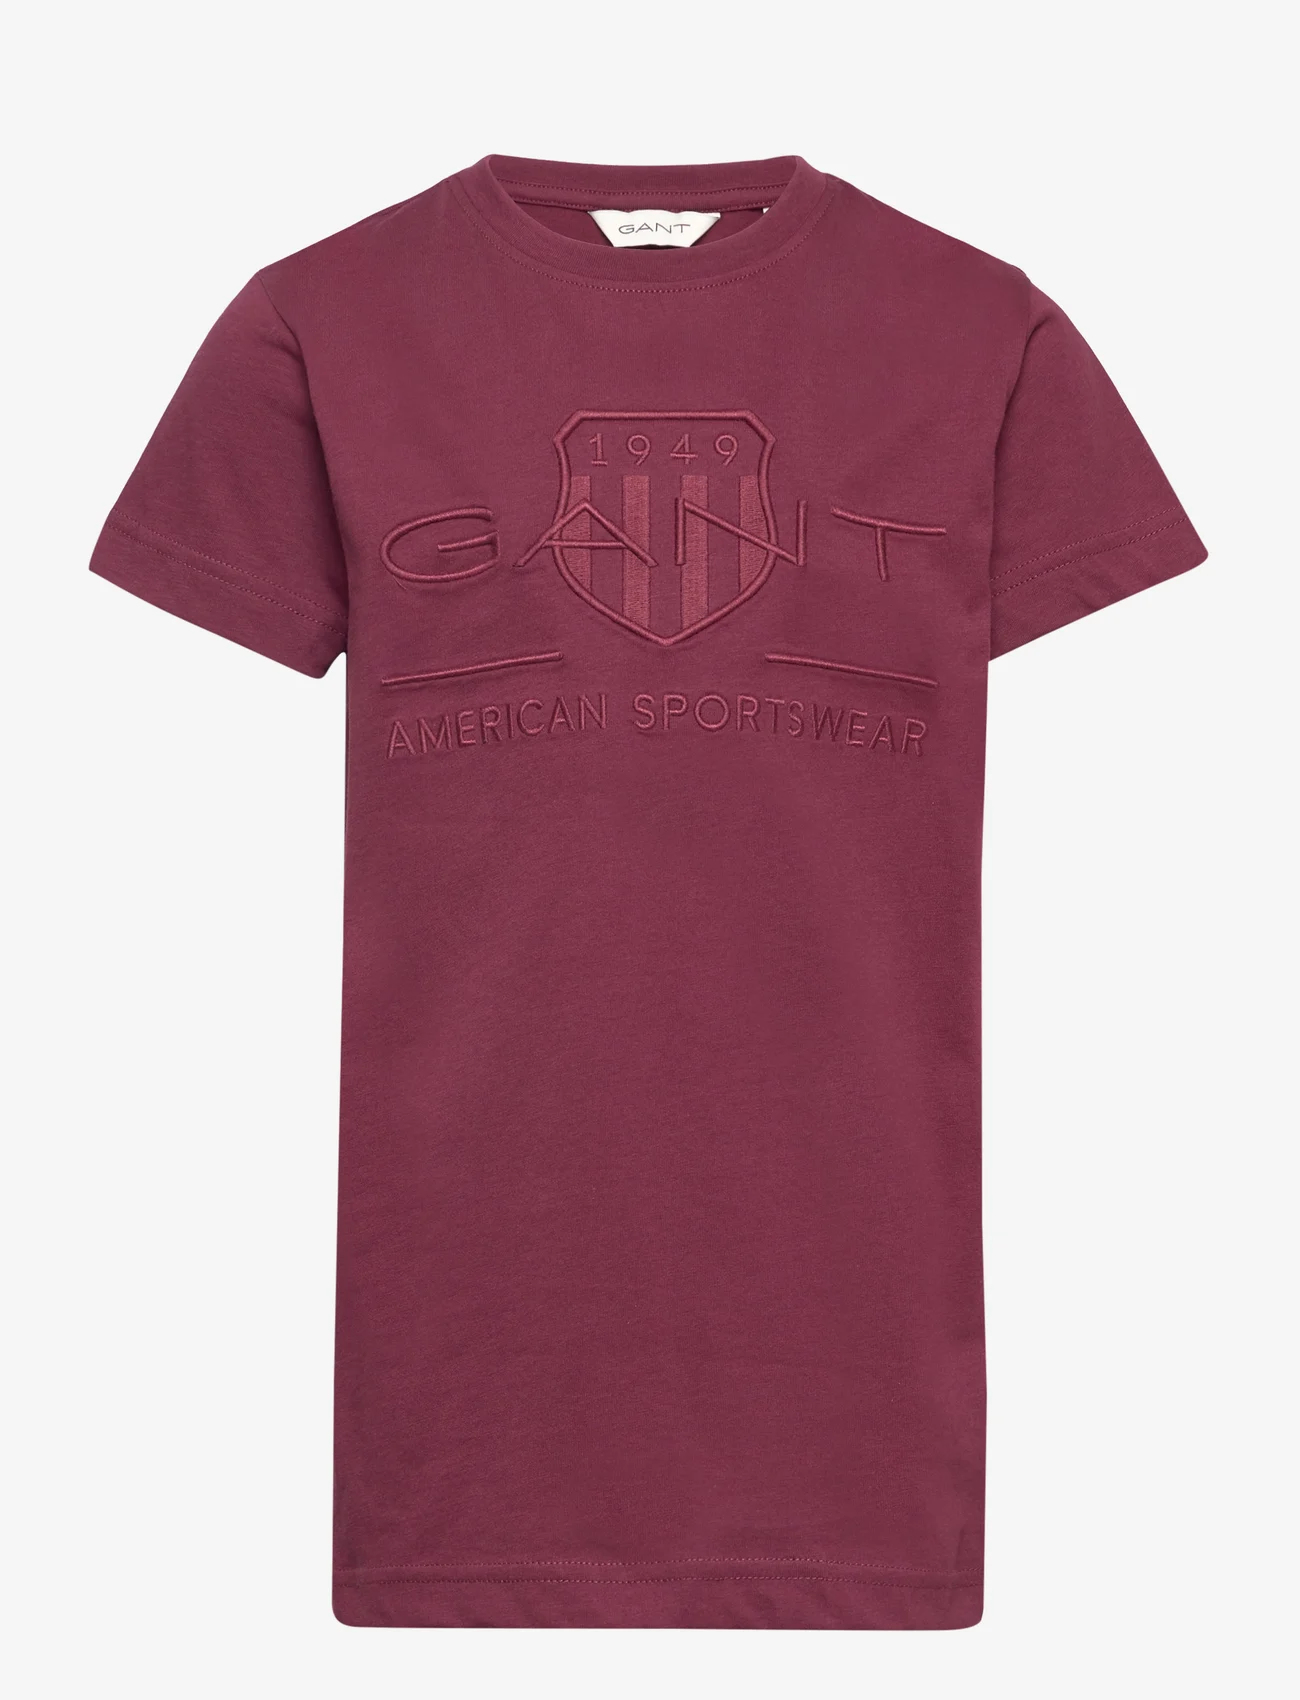 GANT - TONAL AS SS T-SHIRT - short-sleeved t-shirts - deep grape purple - 0